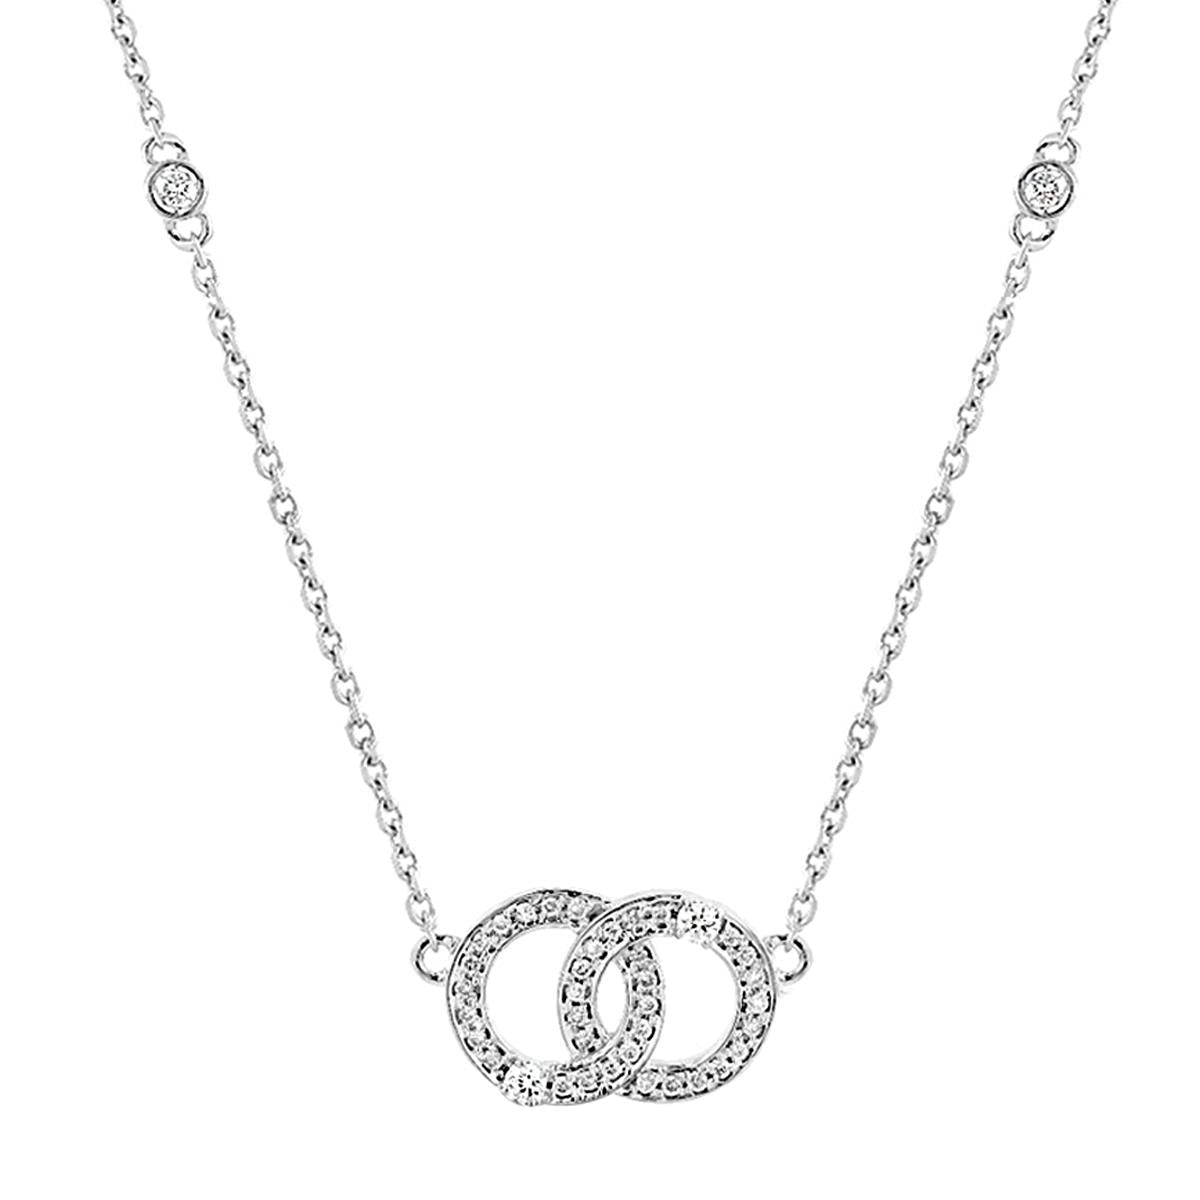 Double Ring Black and White Diamond Necklace - Arev Diamond